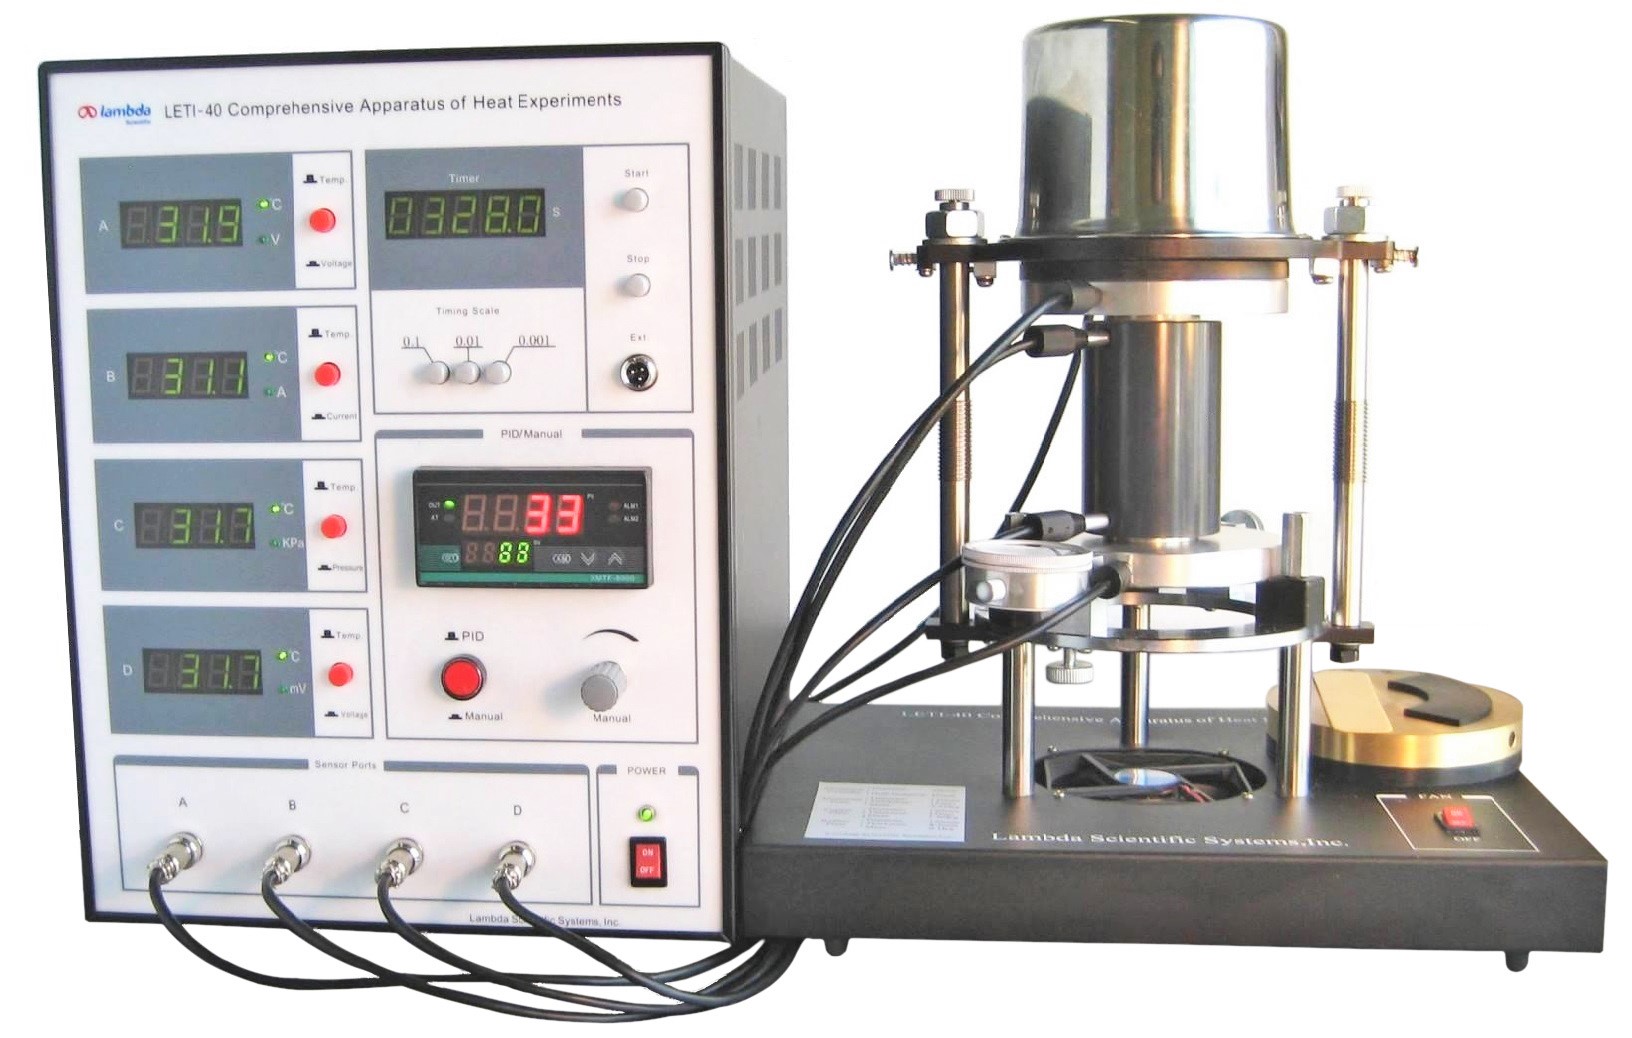 LETI-40 Apparatus of Comprehensive Heat Experiments